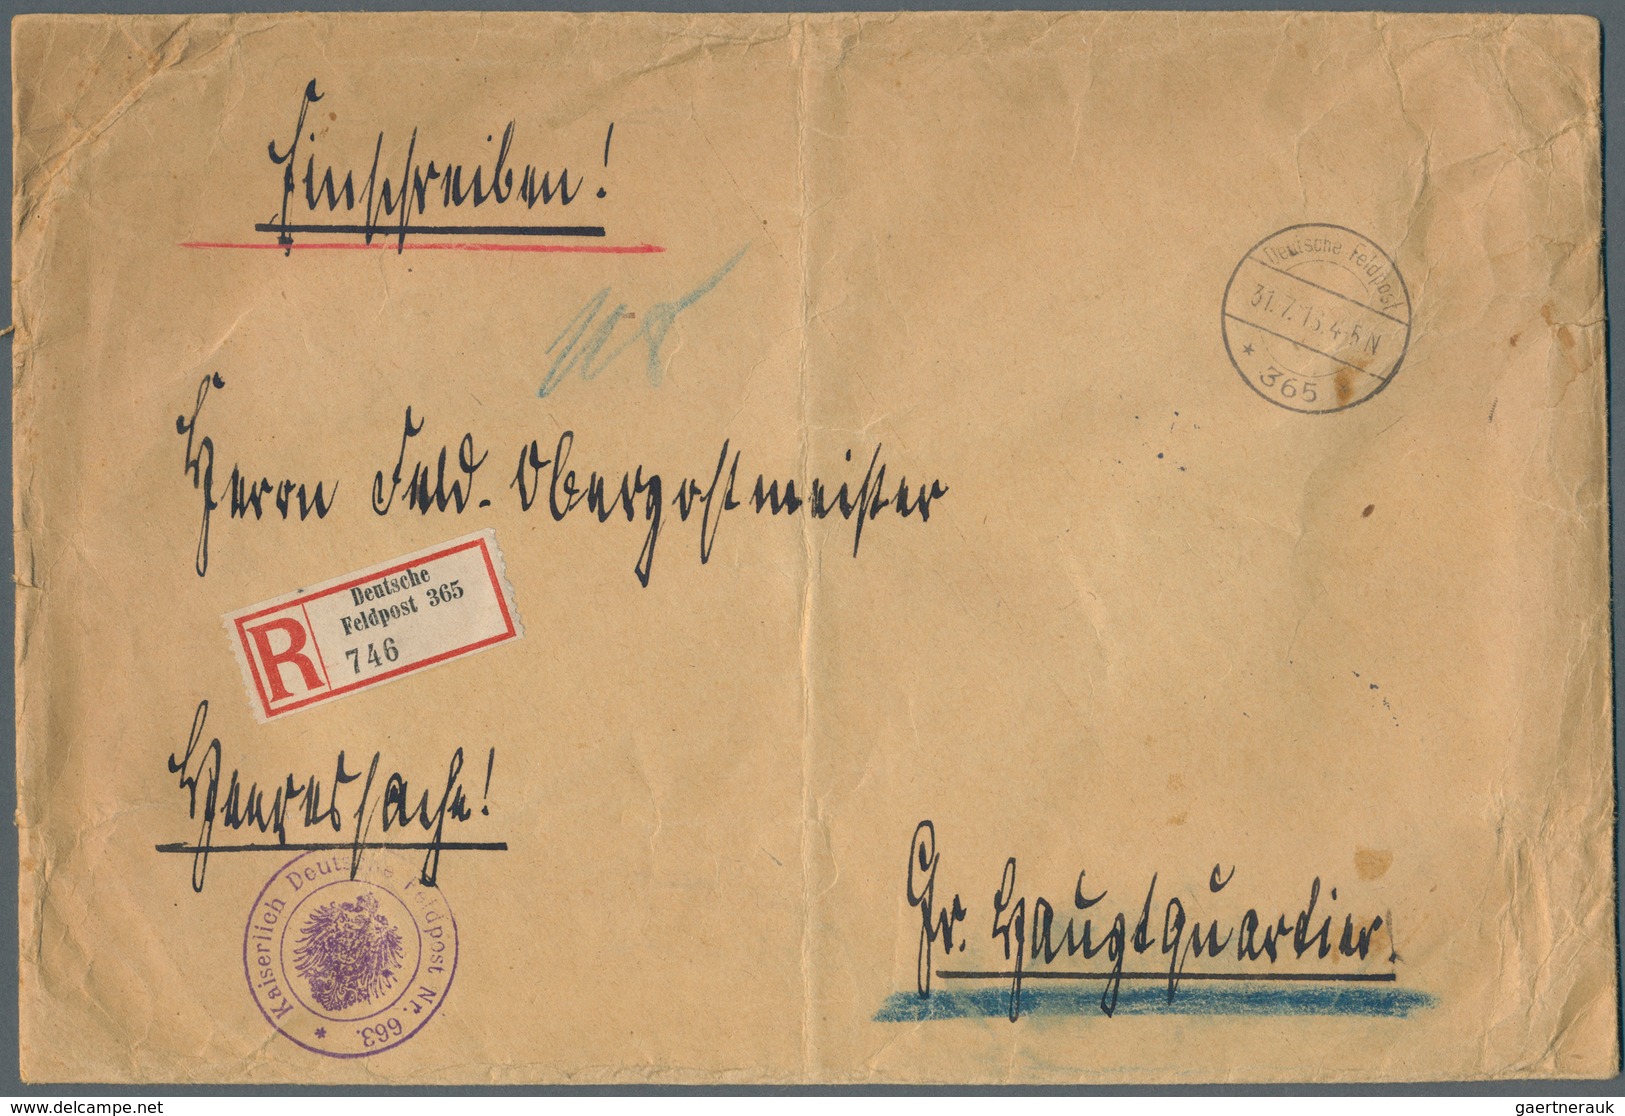 00342 Holyland: 1918, Large Registered Cover From Haifa With Fieldpost Mark "Deutsche Feldpost 365 31.7.18 - Palästina